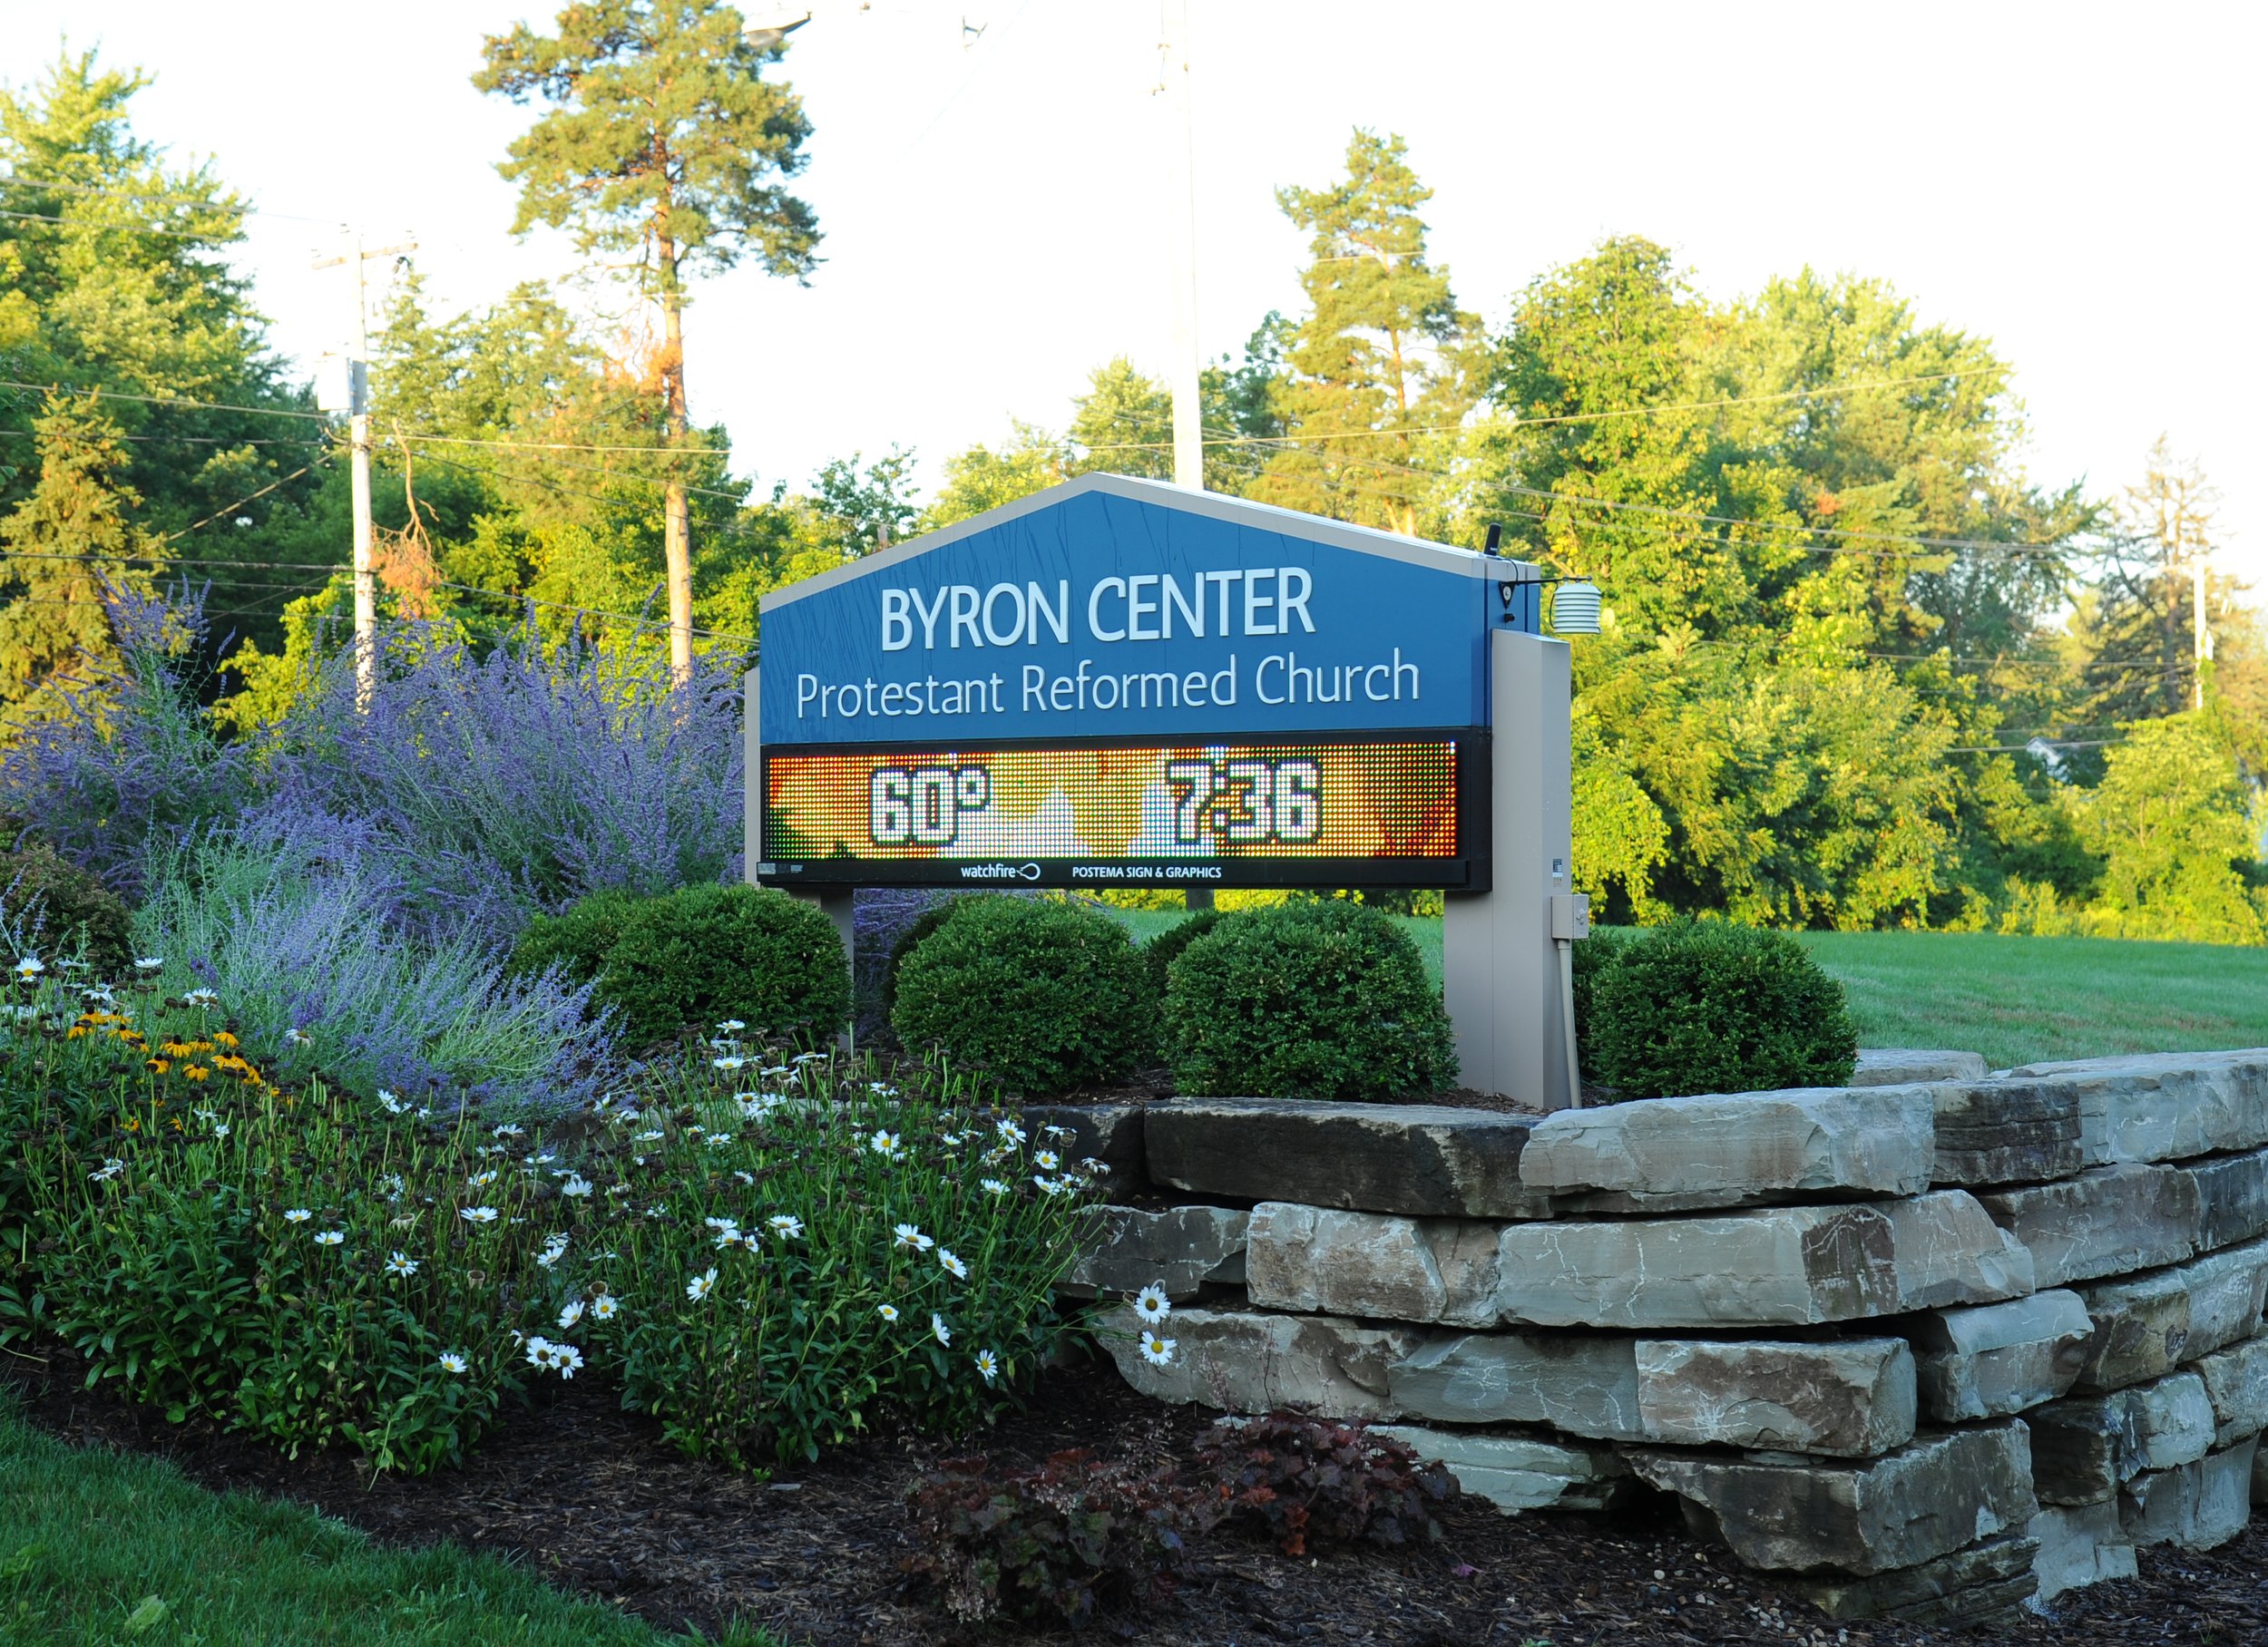 Bryon Center Protestant.jpg